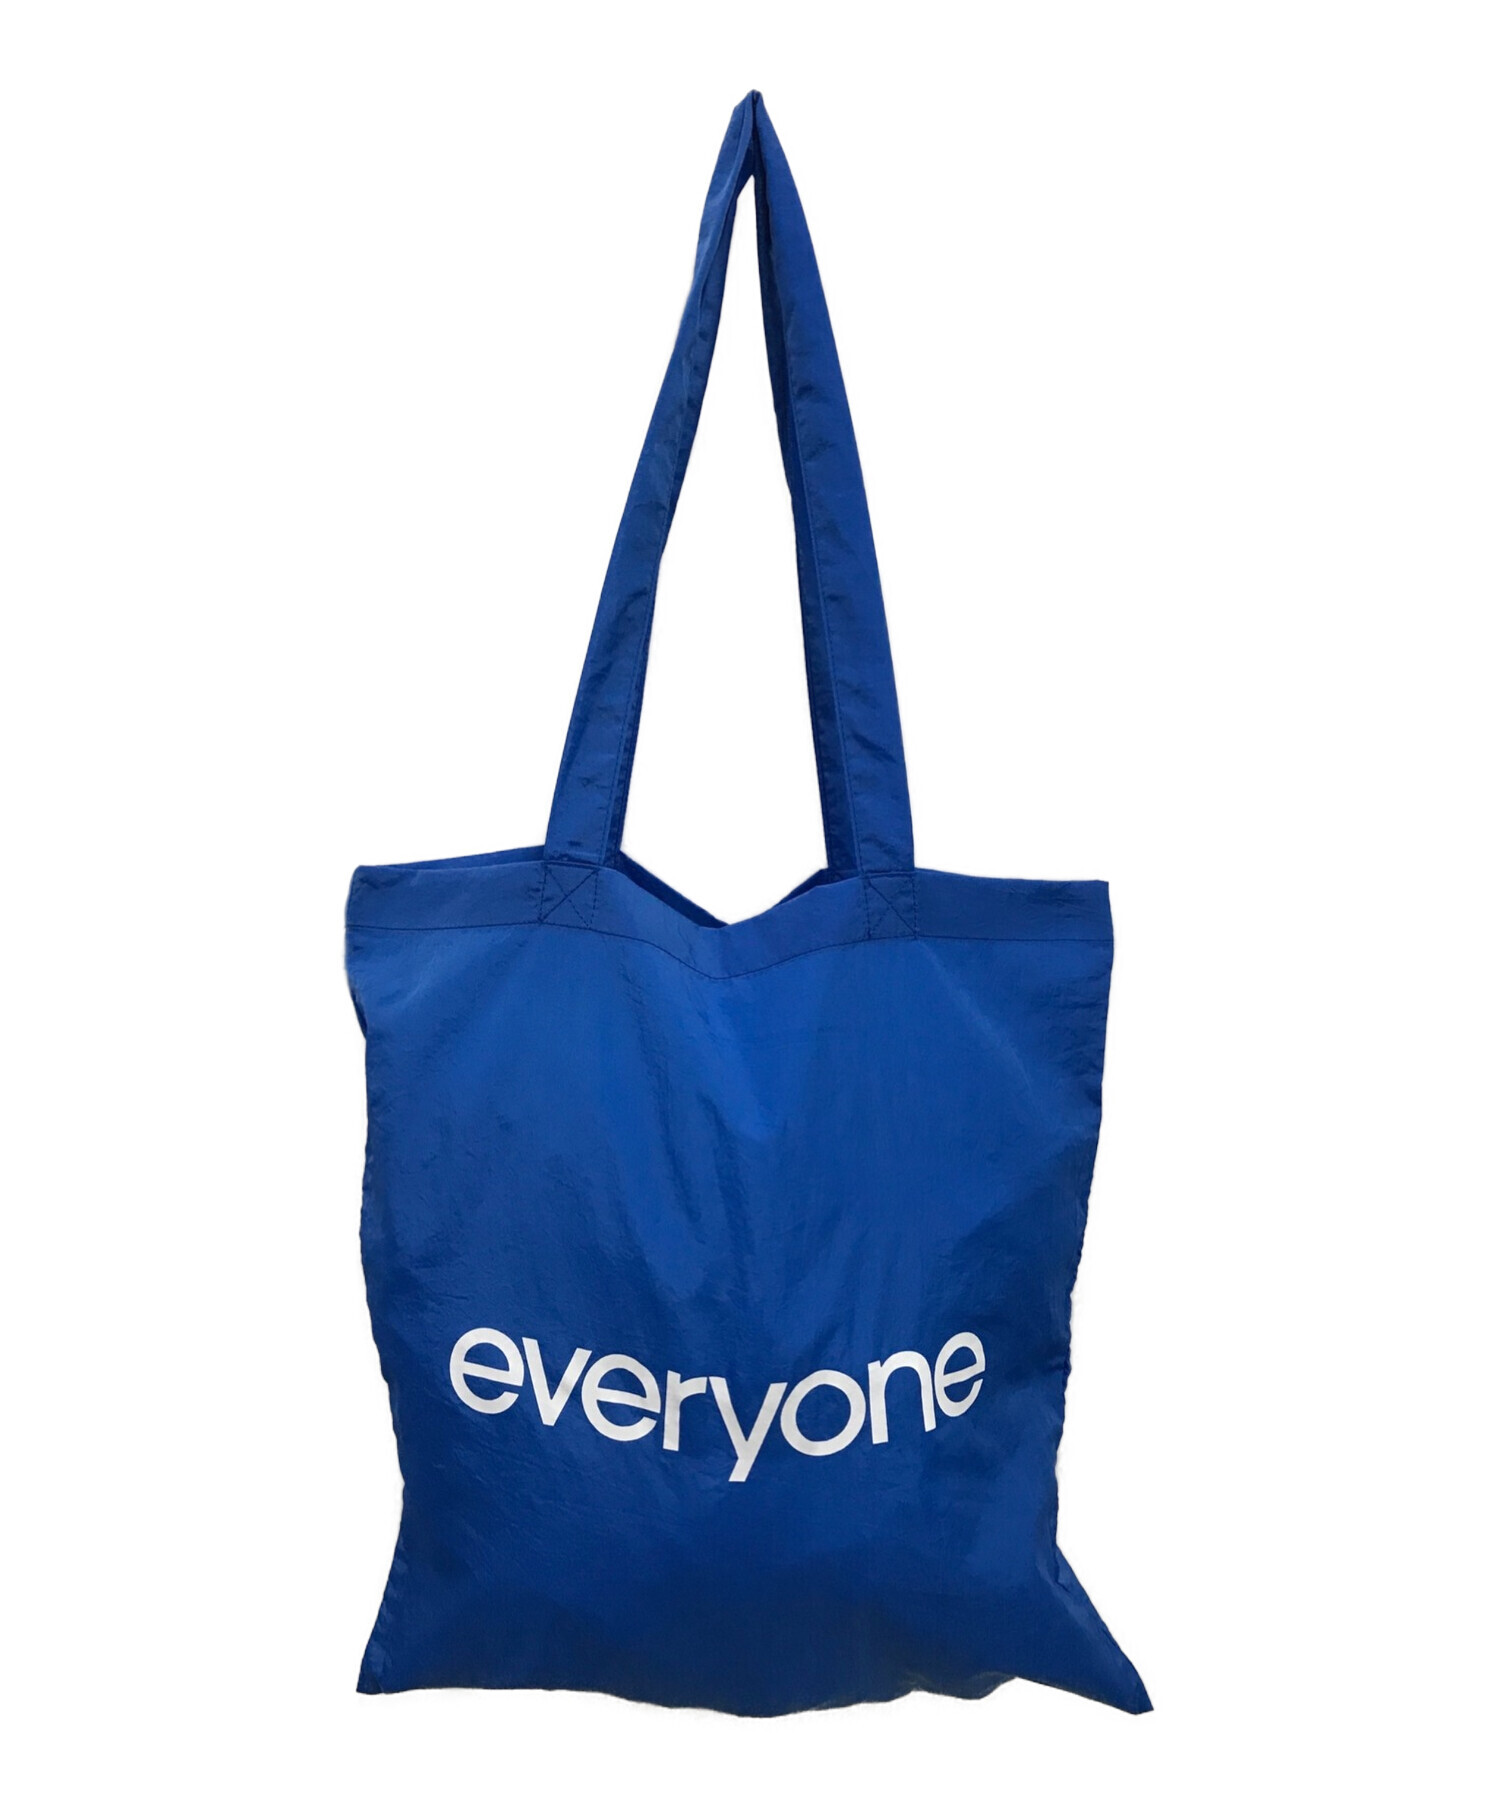 ennoy【完売】everyone nylon logo tote bag (BROWN) - トートバッグ